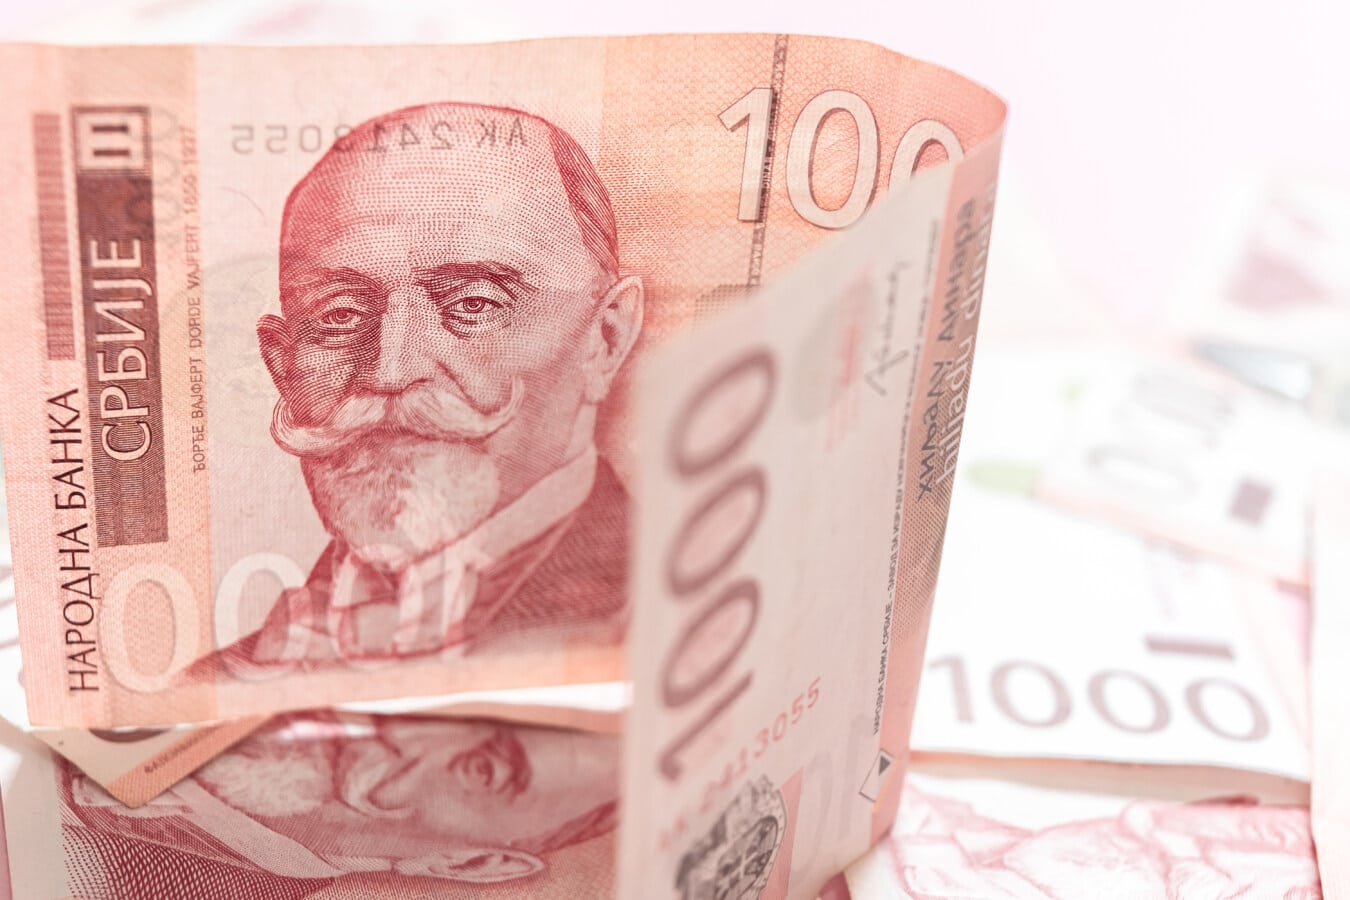 kontant, Serbien, serbiske dinar, pengeseddel, penge, papir, værdi, indkomst, besparelser, finansiering